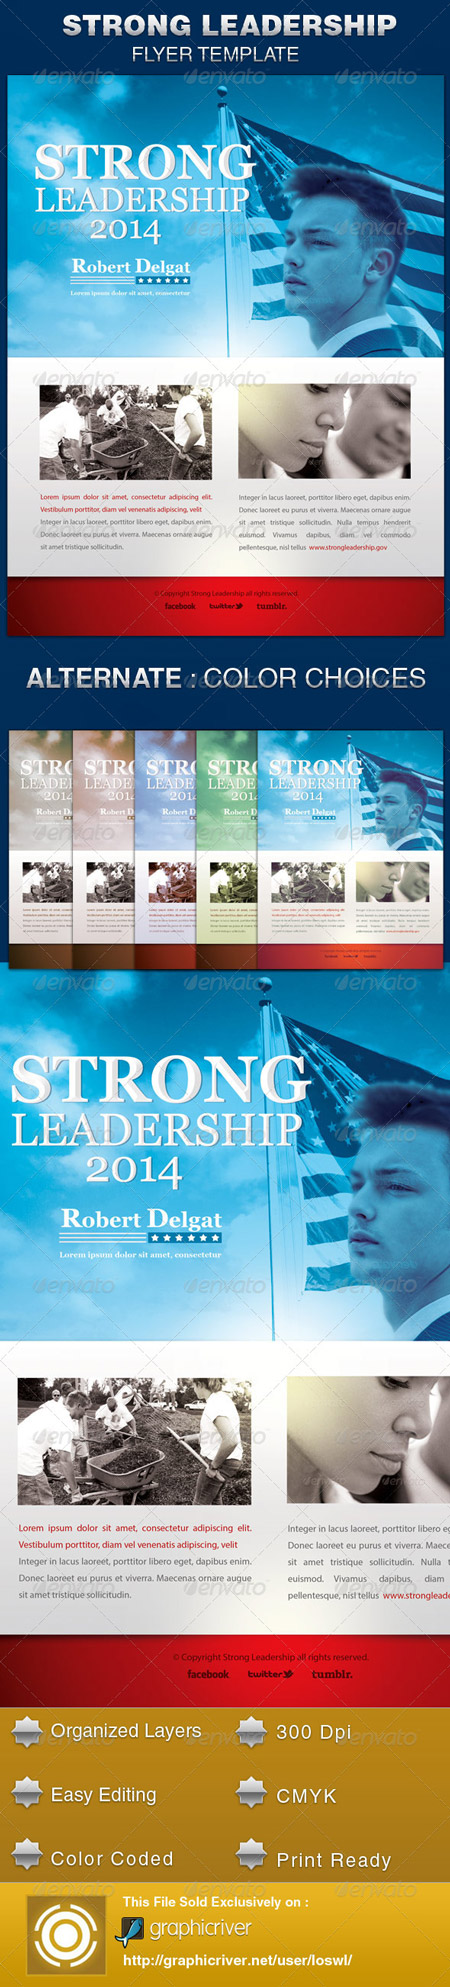 PSD - Strong Leadership Political Flyer Template